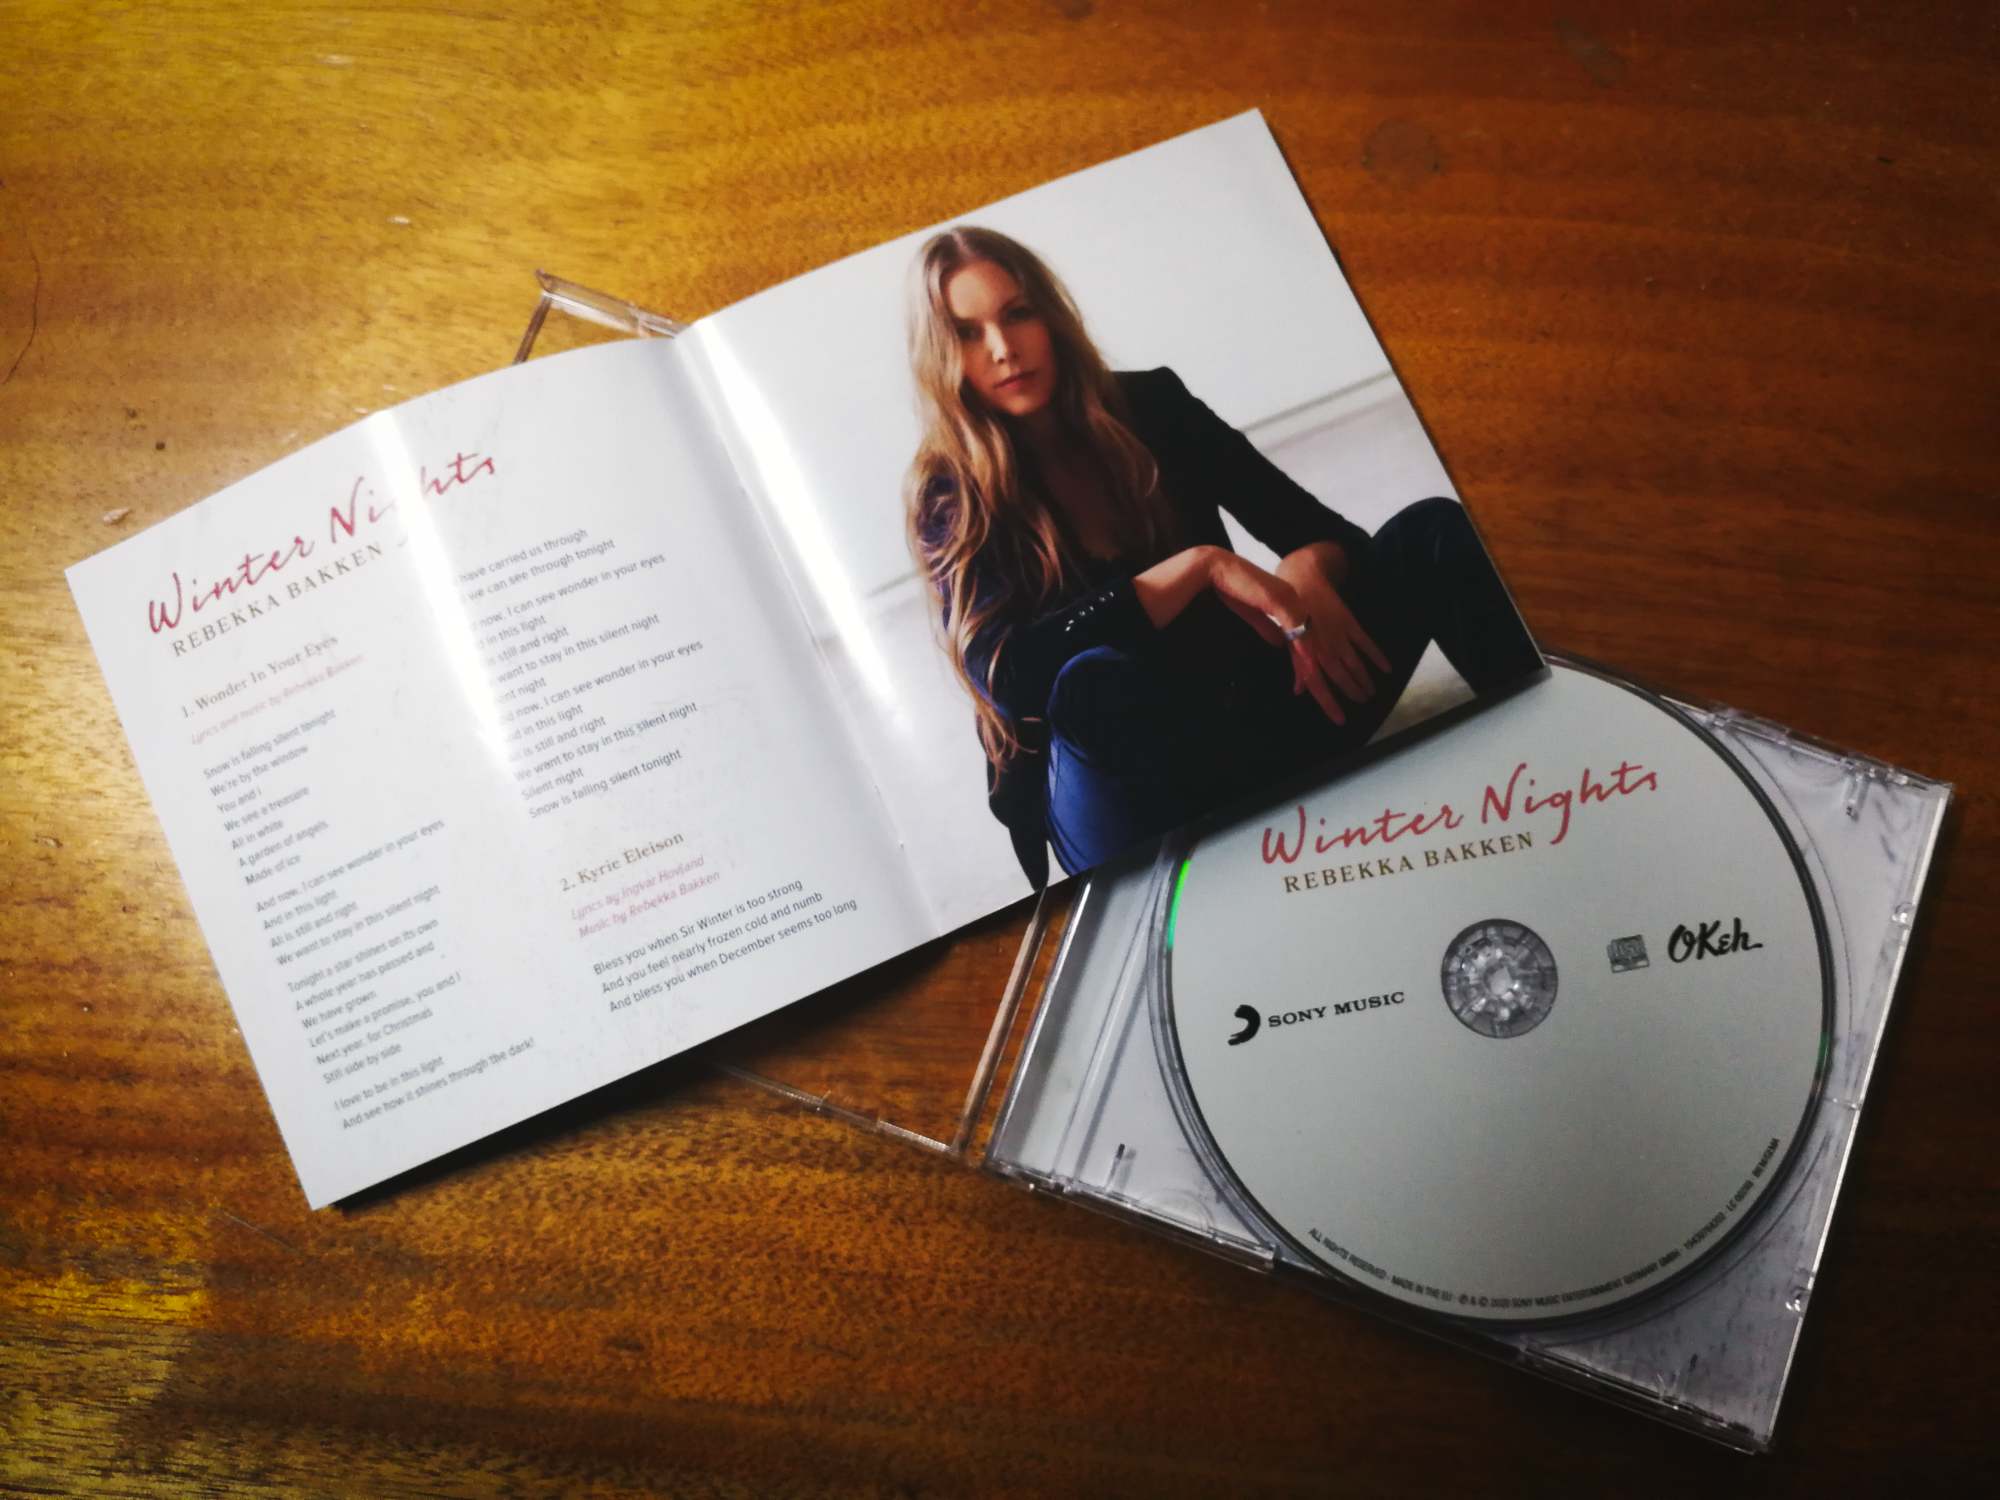 Rebekka Bakken Winter Nights CD Review